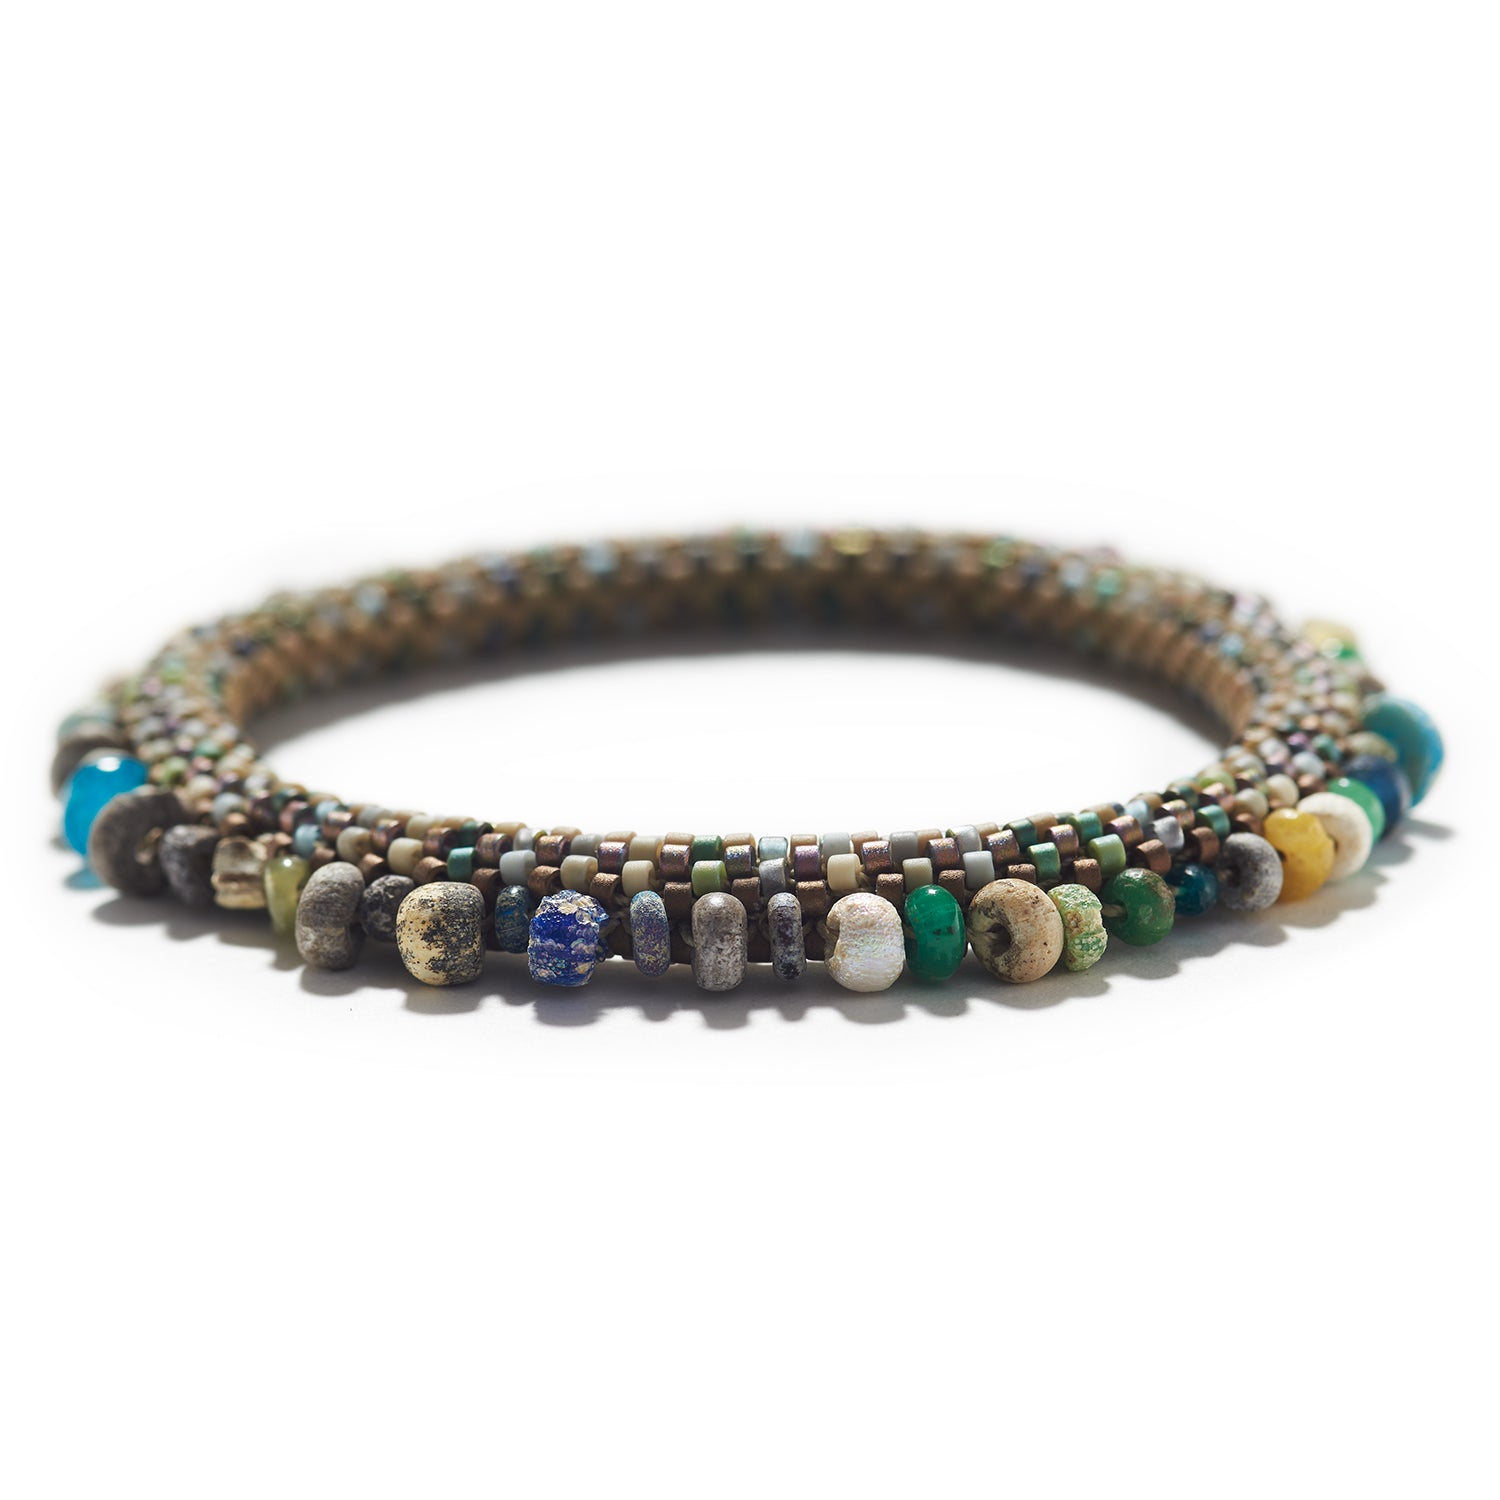 Medieval Beads Bracelet